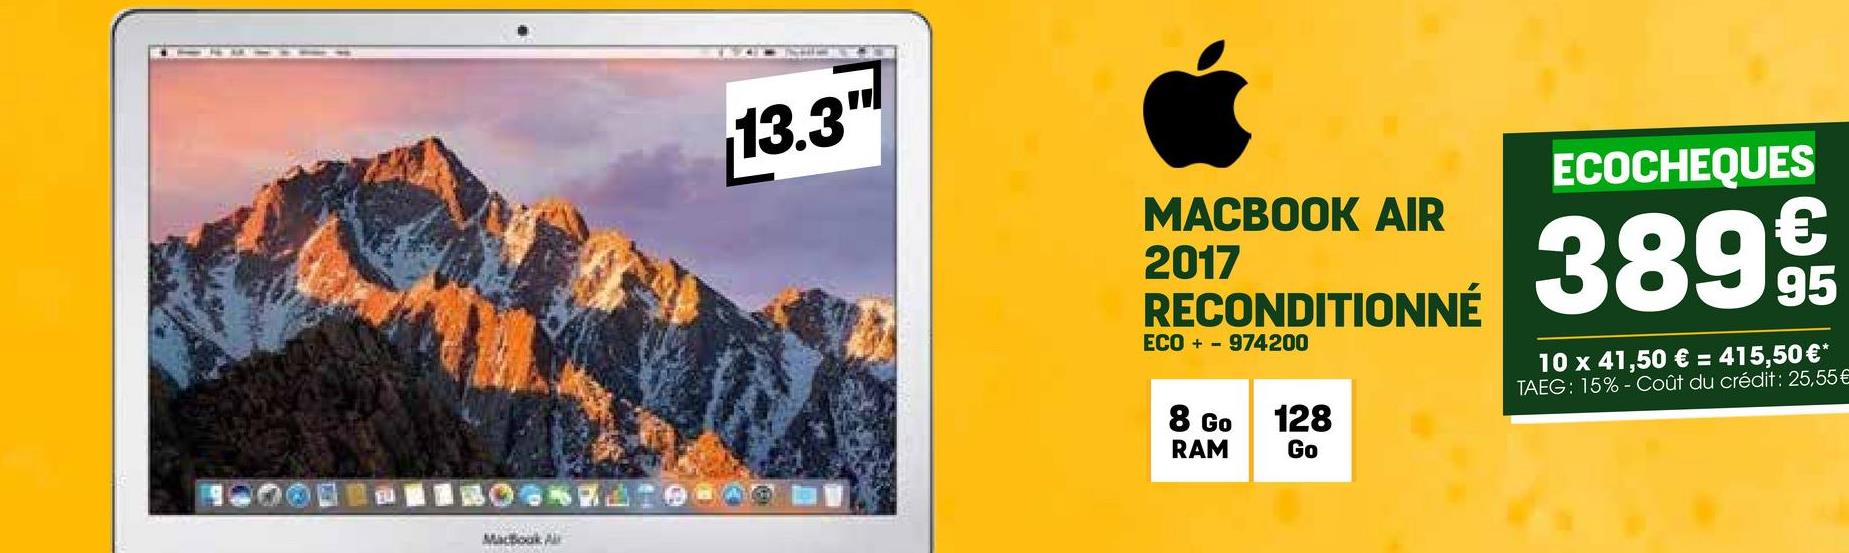 EUI
MacBook A
13.3"
MACBOOK AIR
2017
RECONDITIONNÉ
ECO+ 974200
ECOCHEQUES
389 9t
10 x 41,50 € = 415,50€*
TAEG: 15%-Coût du crédit: 25,55€
8 Go
RAM
128
Go